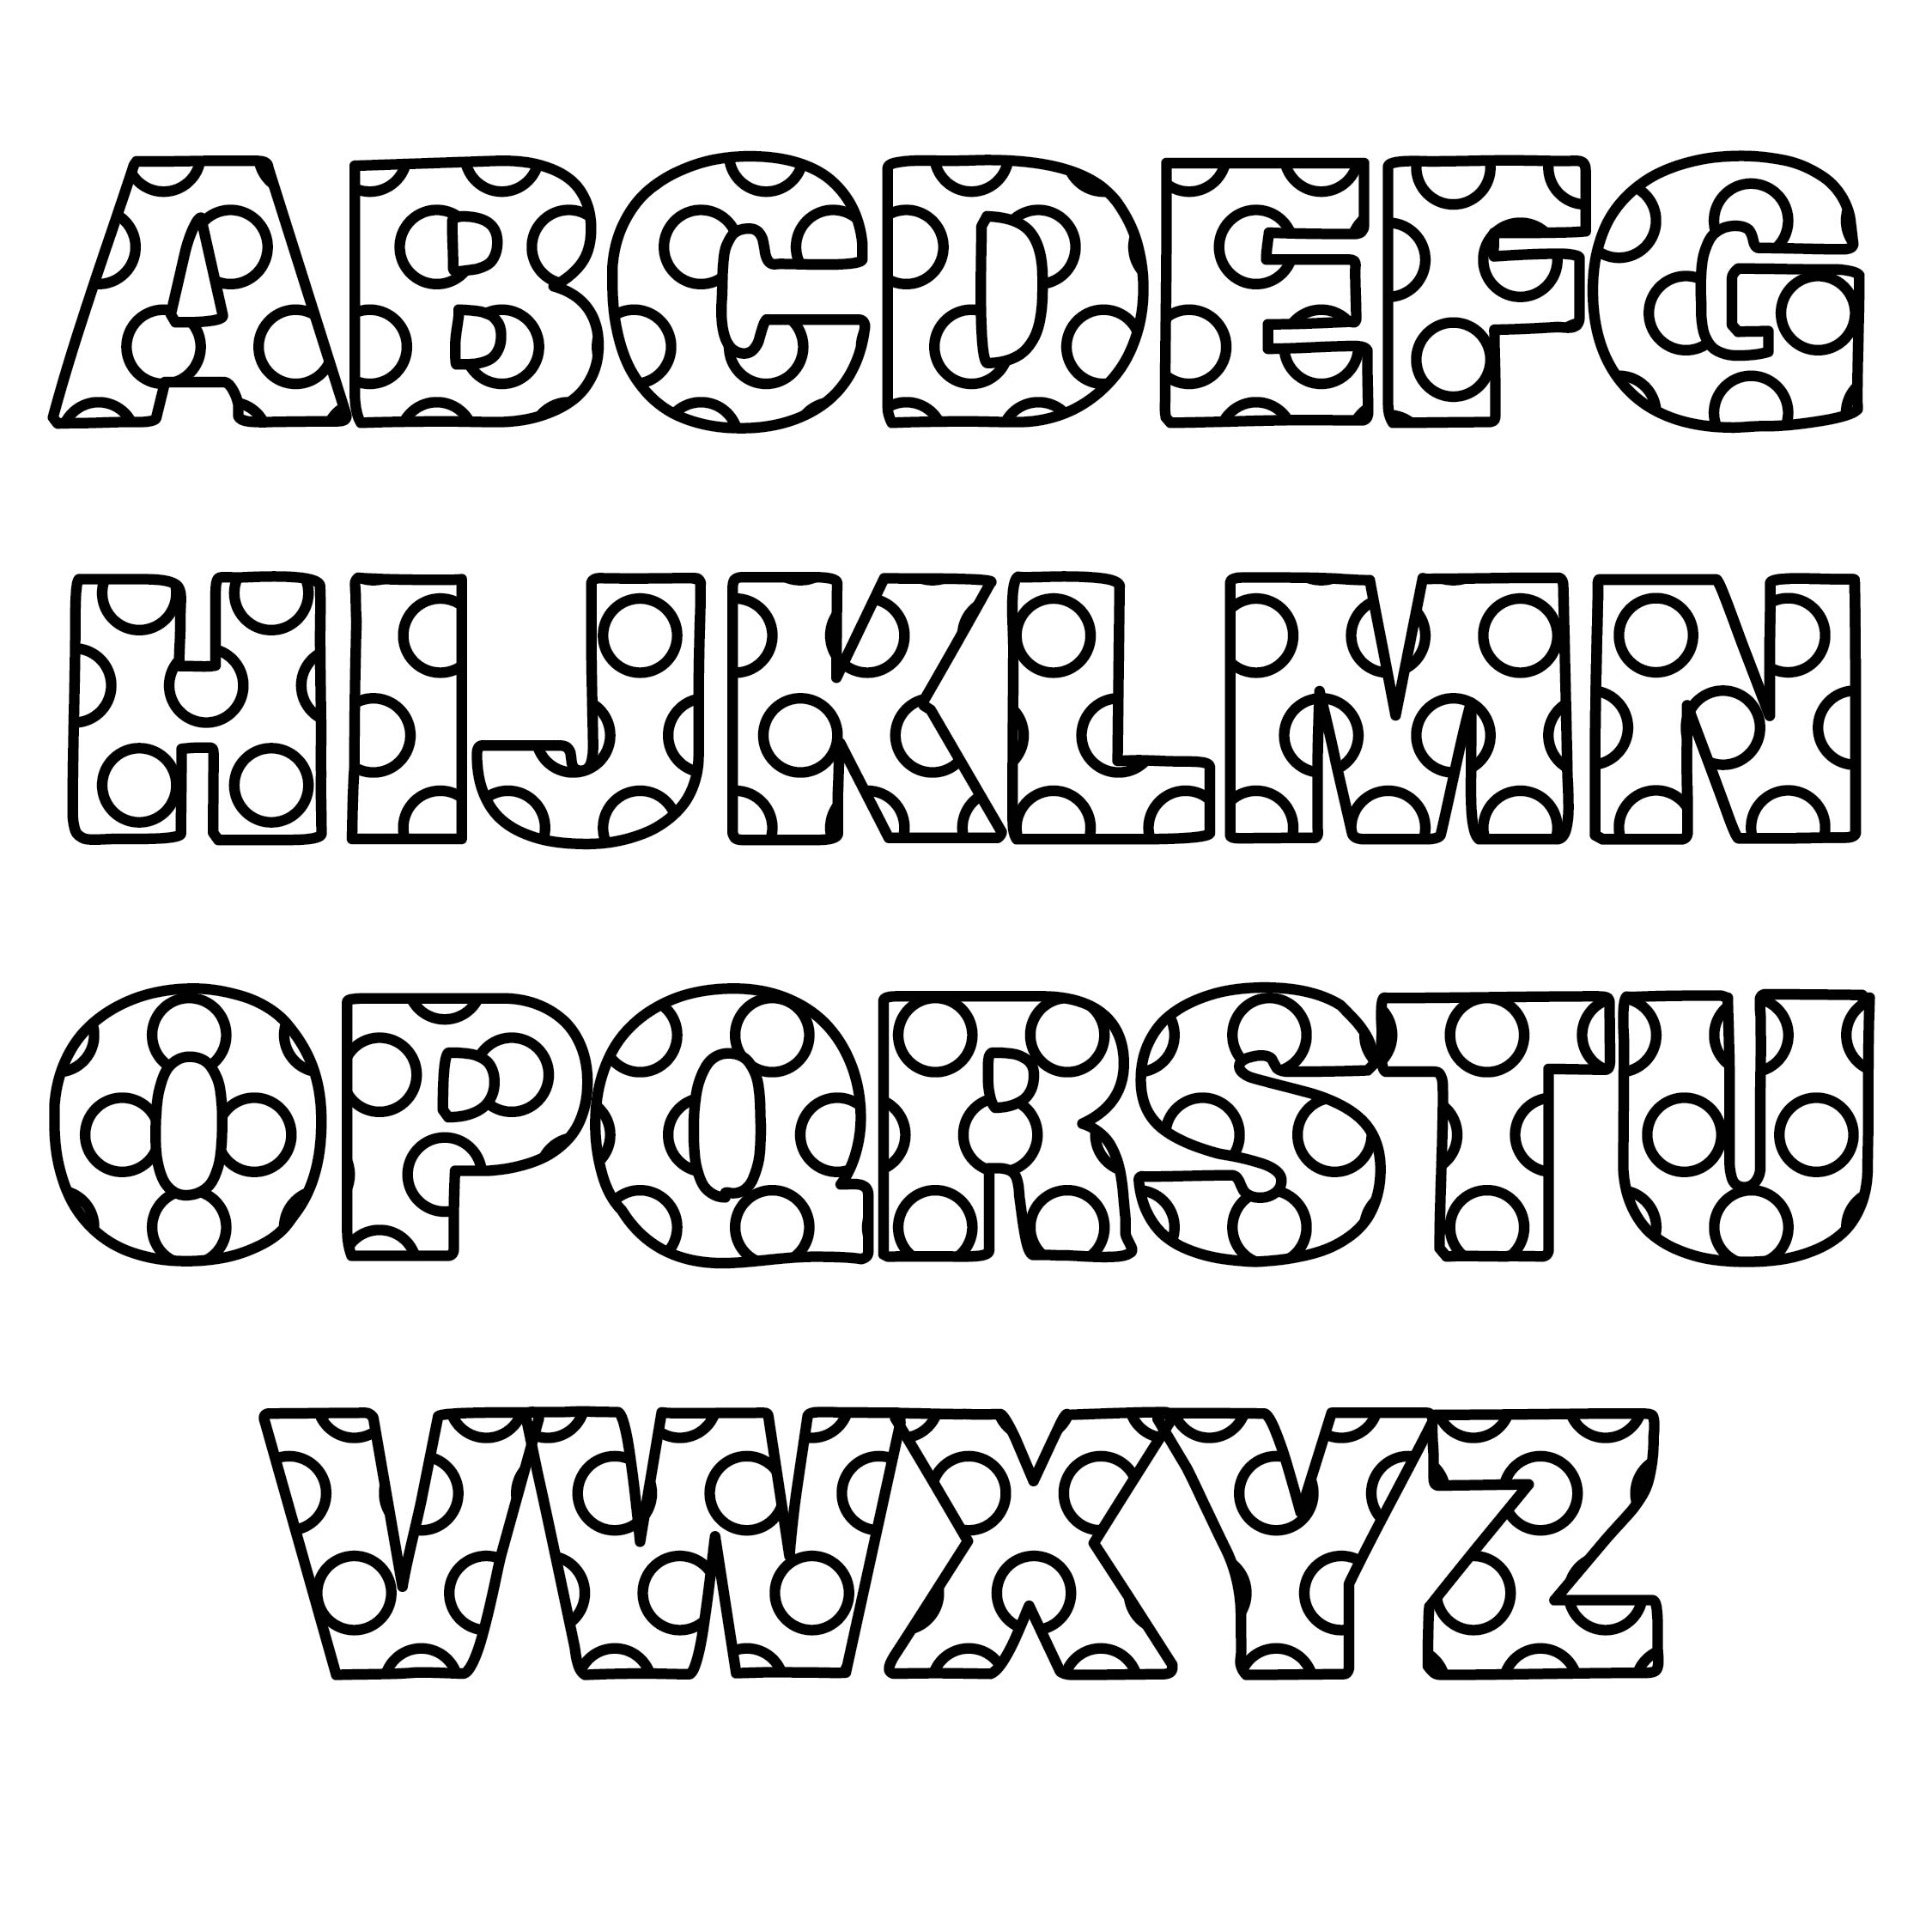 9 Best Images Of Polka Dot Printable Alphabet Letters Bubble Letter D 